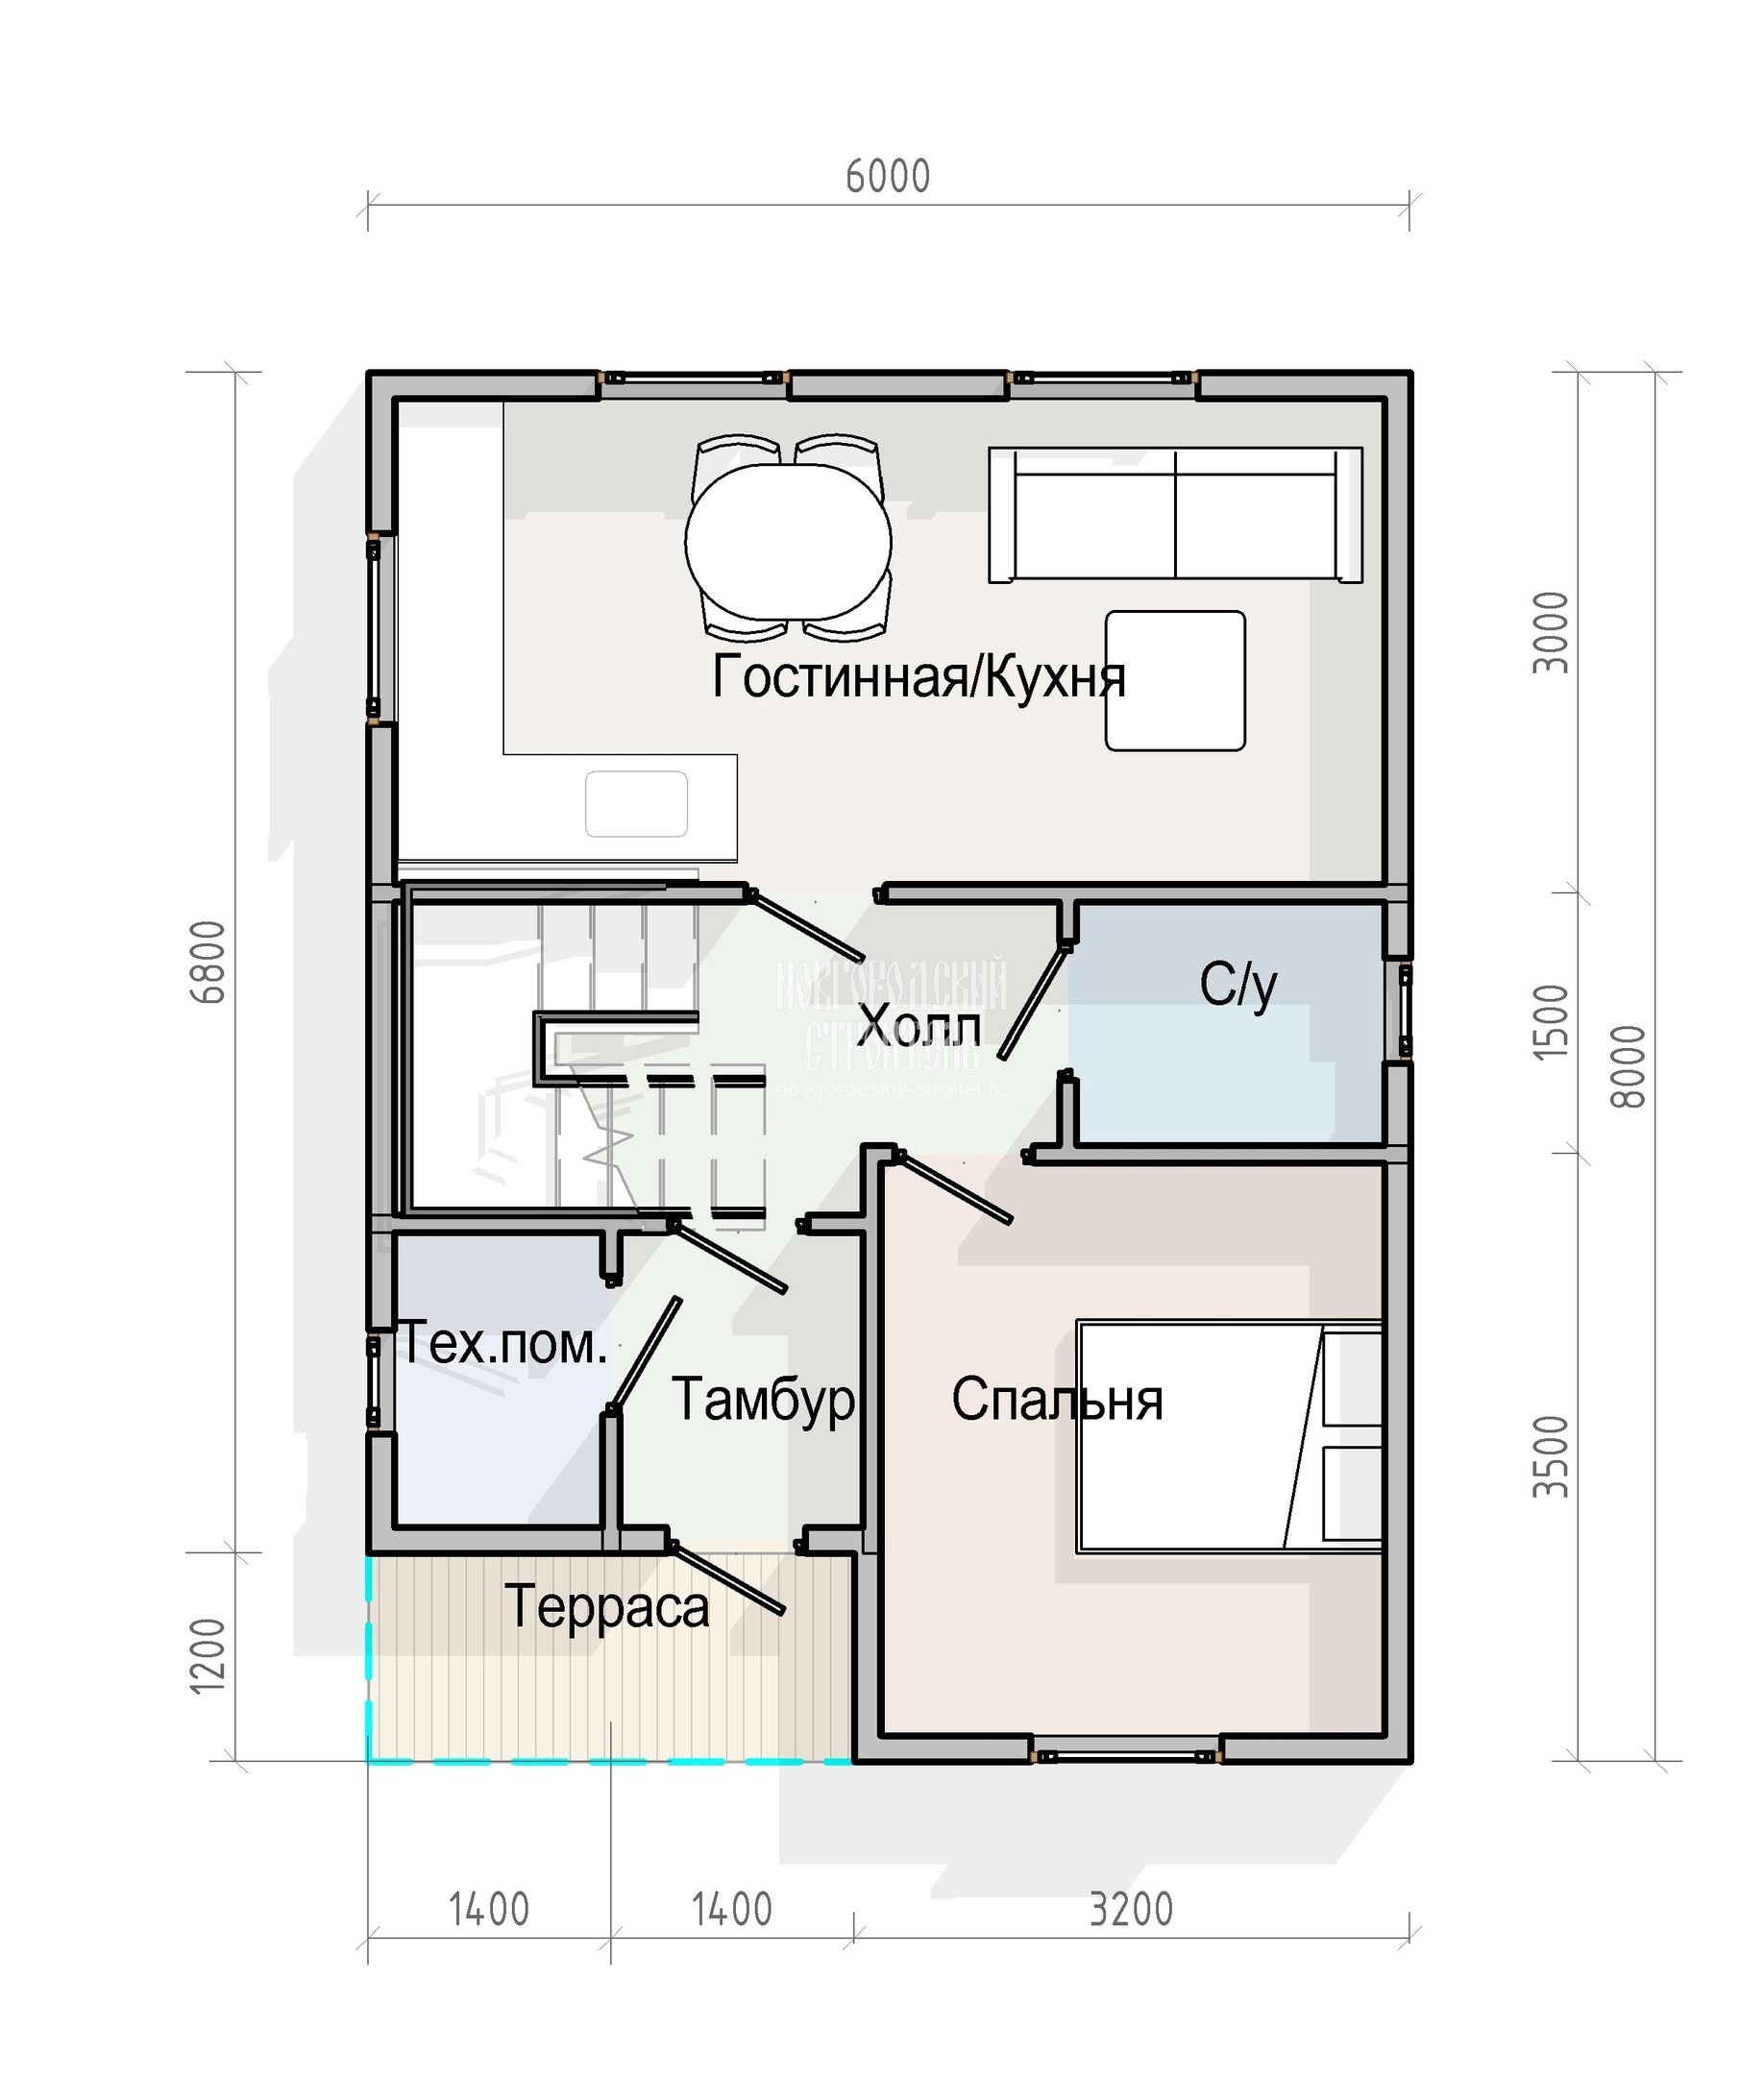 Проект каркасного дома 6х8 в 1.5 этажа - планировка